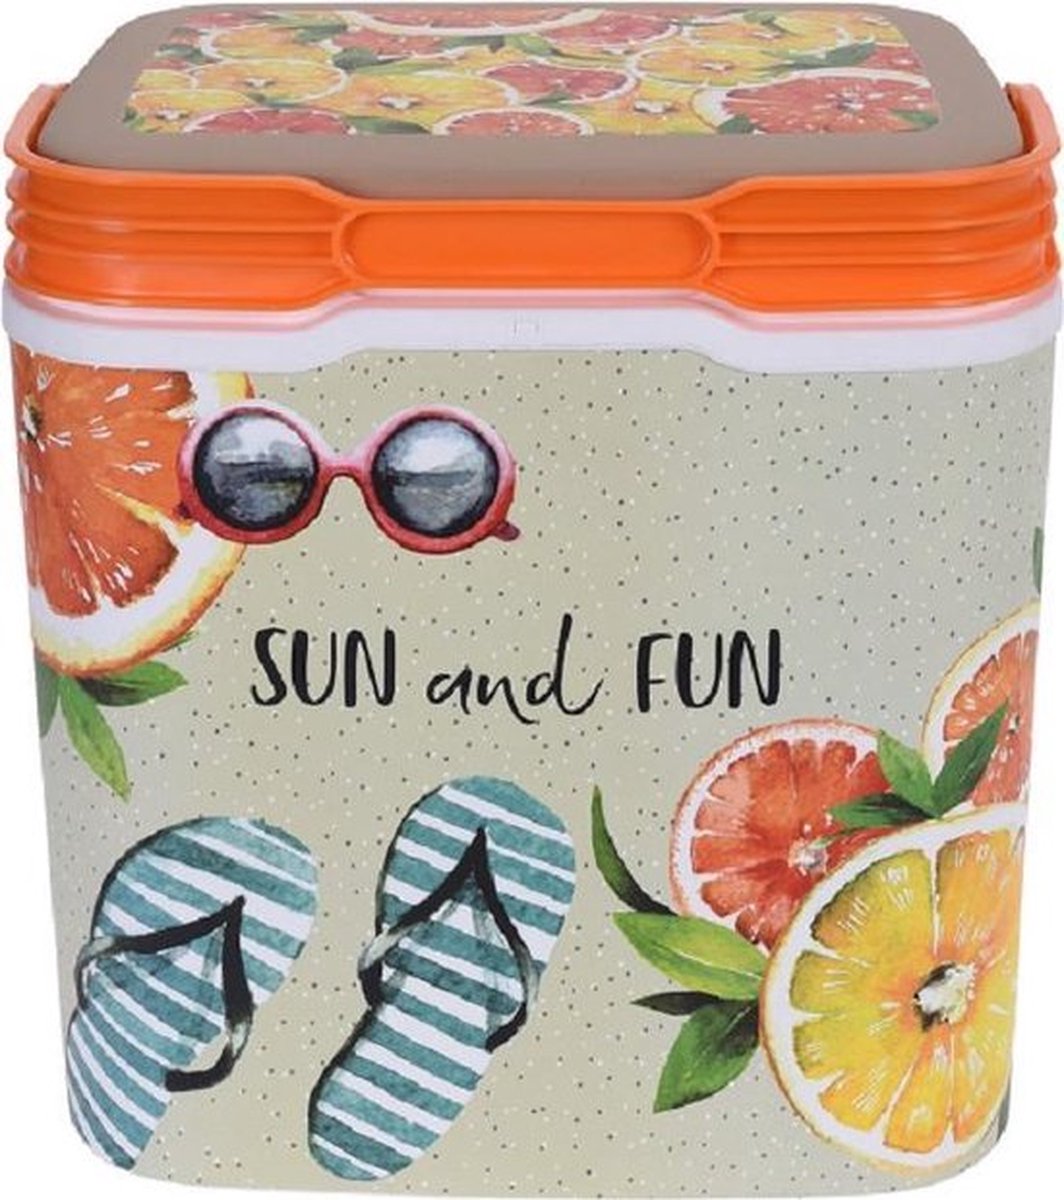 Koelbox - Sun and fun -29 liter - Koelbox met zomerse print